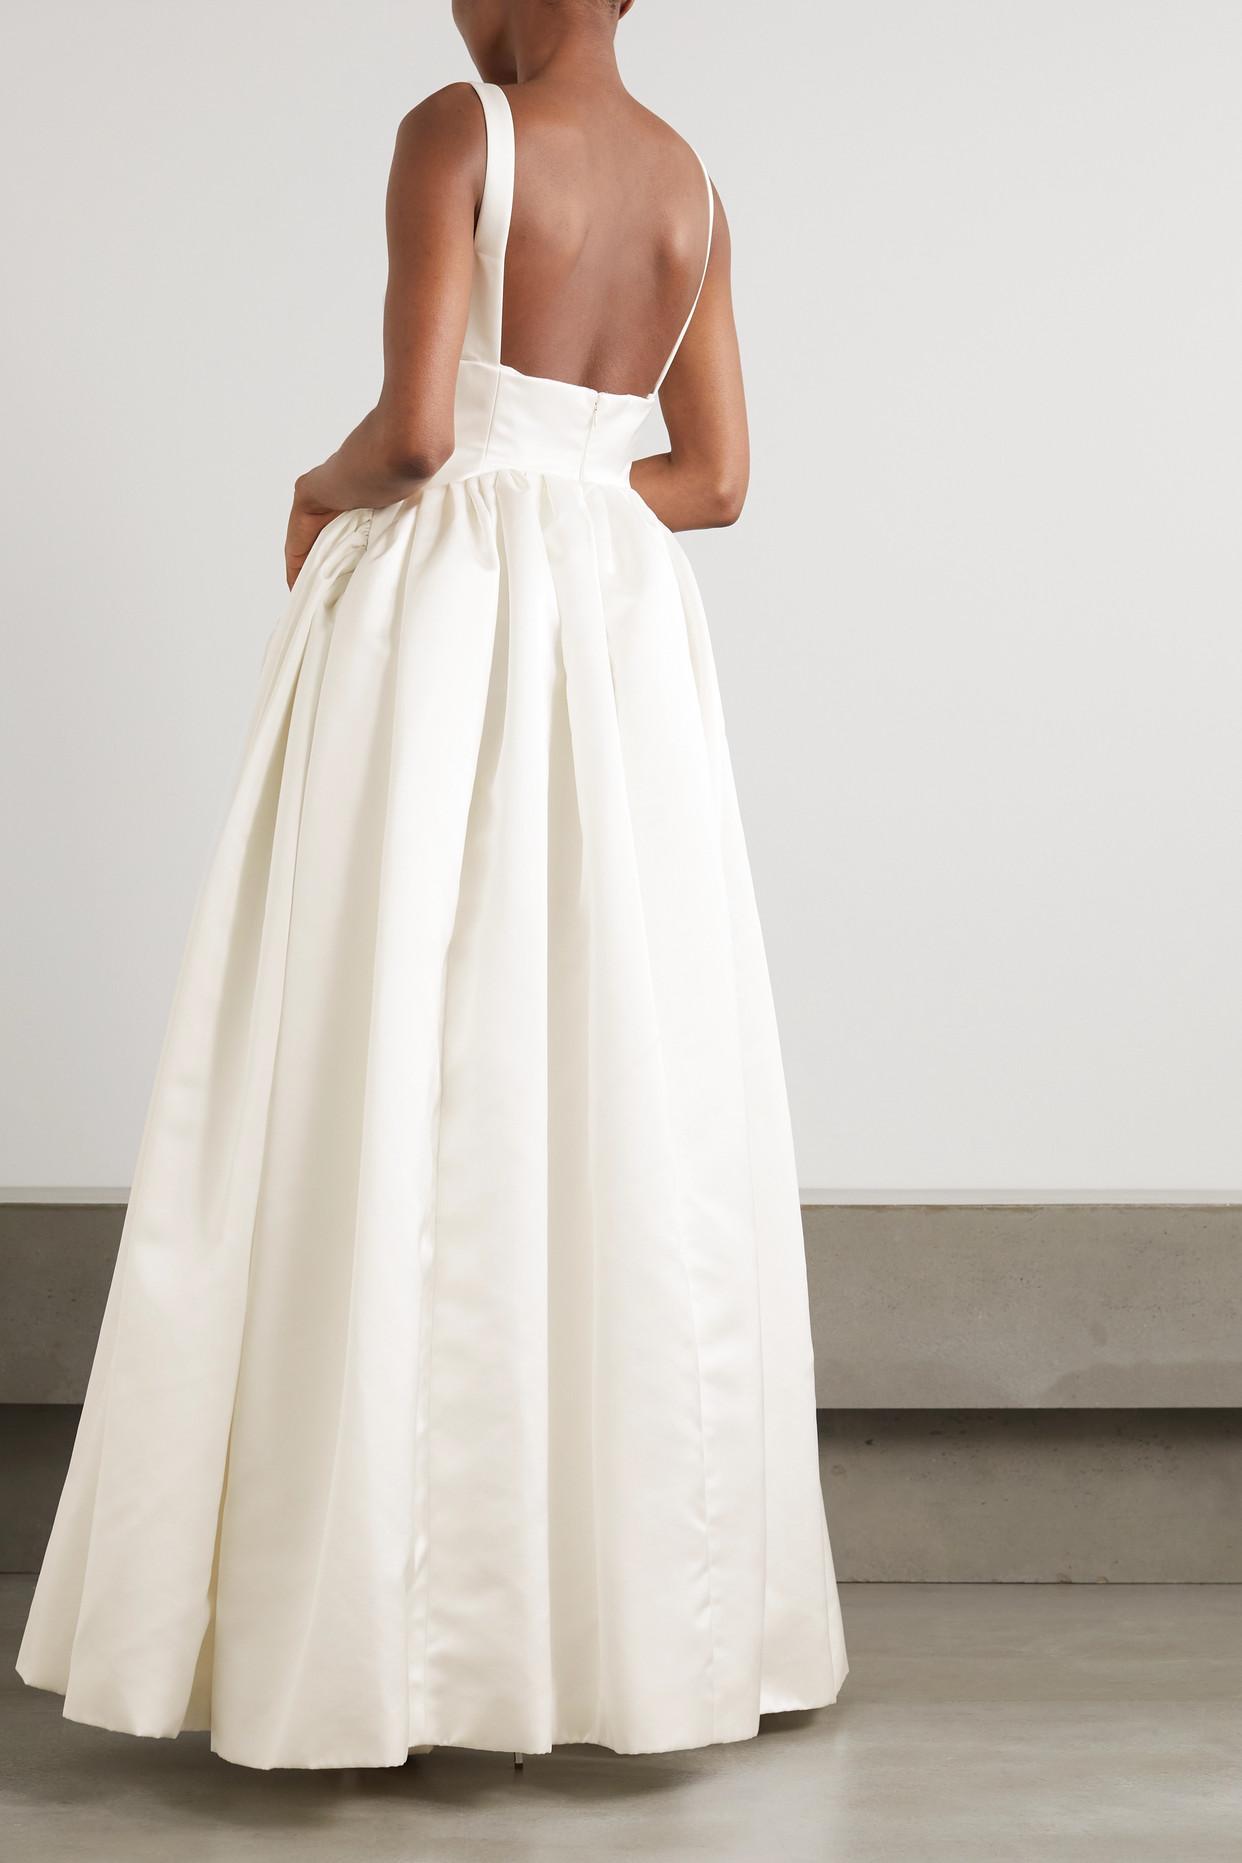 Emilia Wickstead Diamond Duchesse-satin Gown in White | Lyst